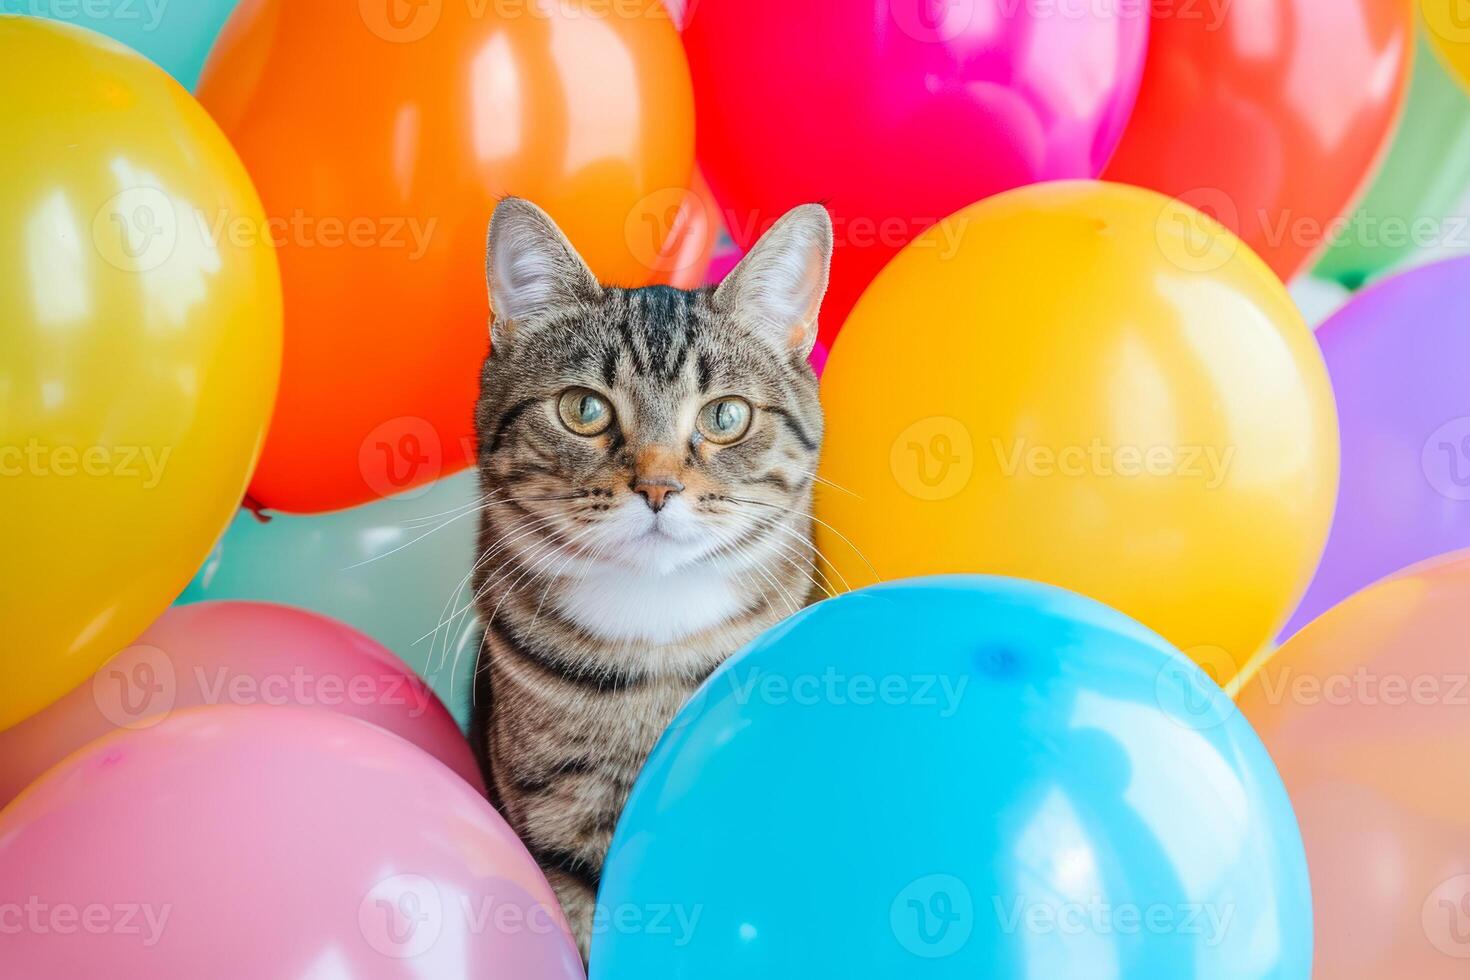 AI generated Cat sits among the festive decorations. Kitten among balloons. Generative AI photo